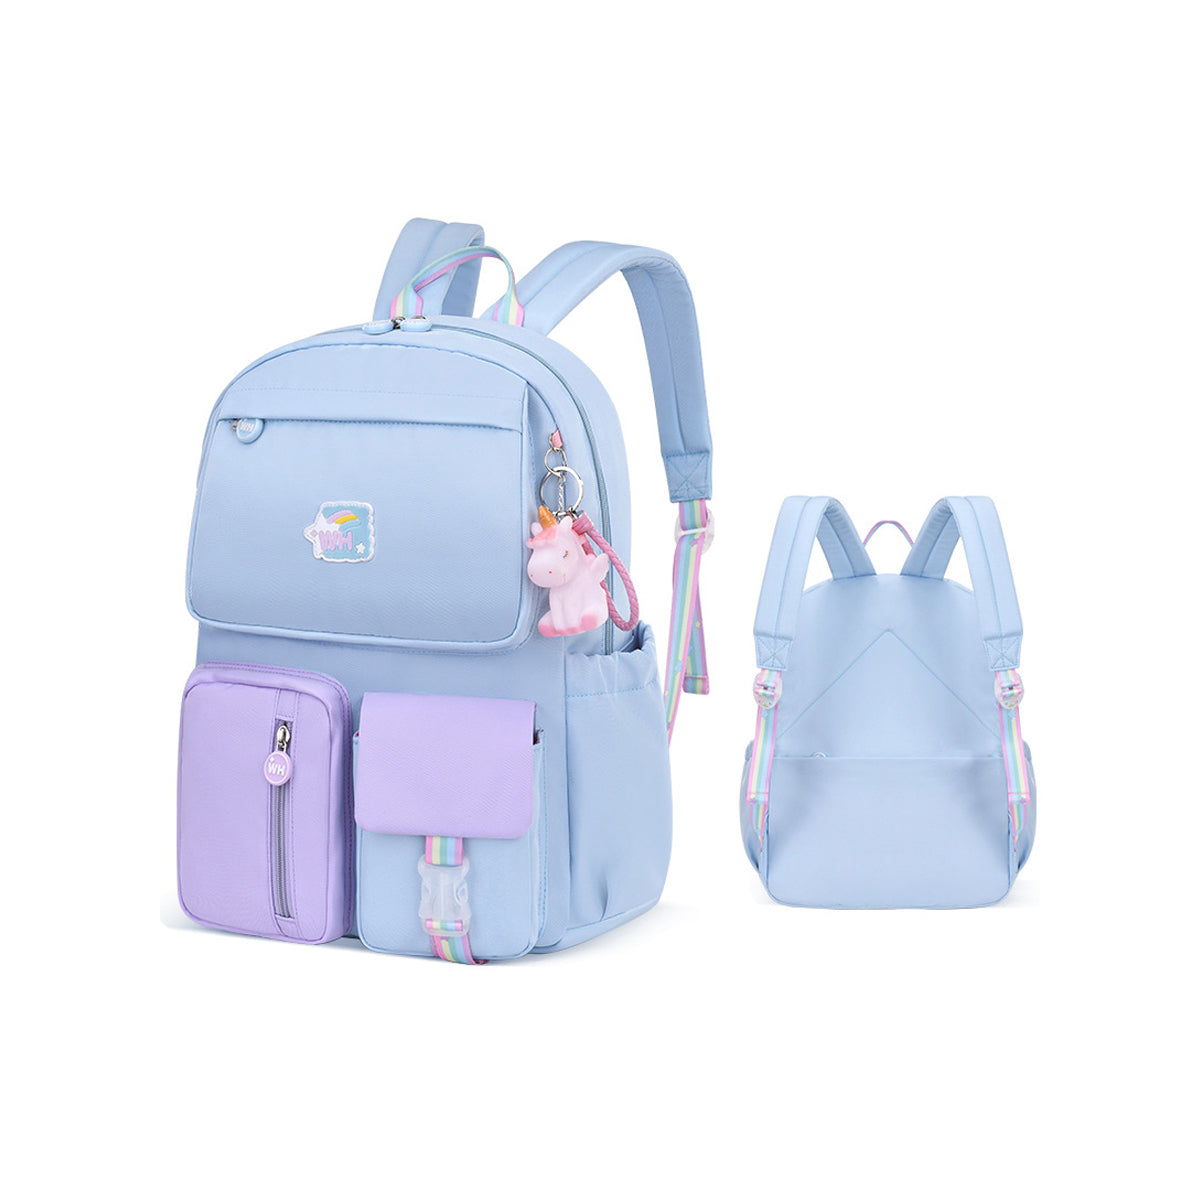 Waterproof And Burden-Relieving Ridge Protection Cute Children's Backpack